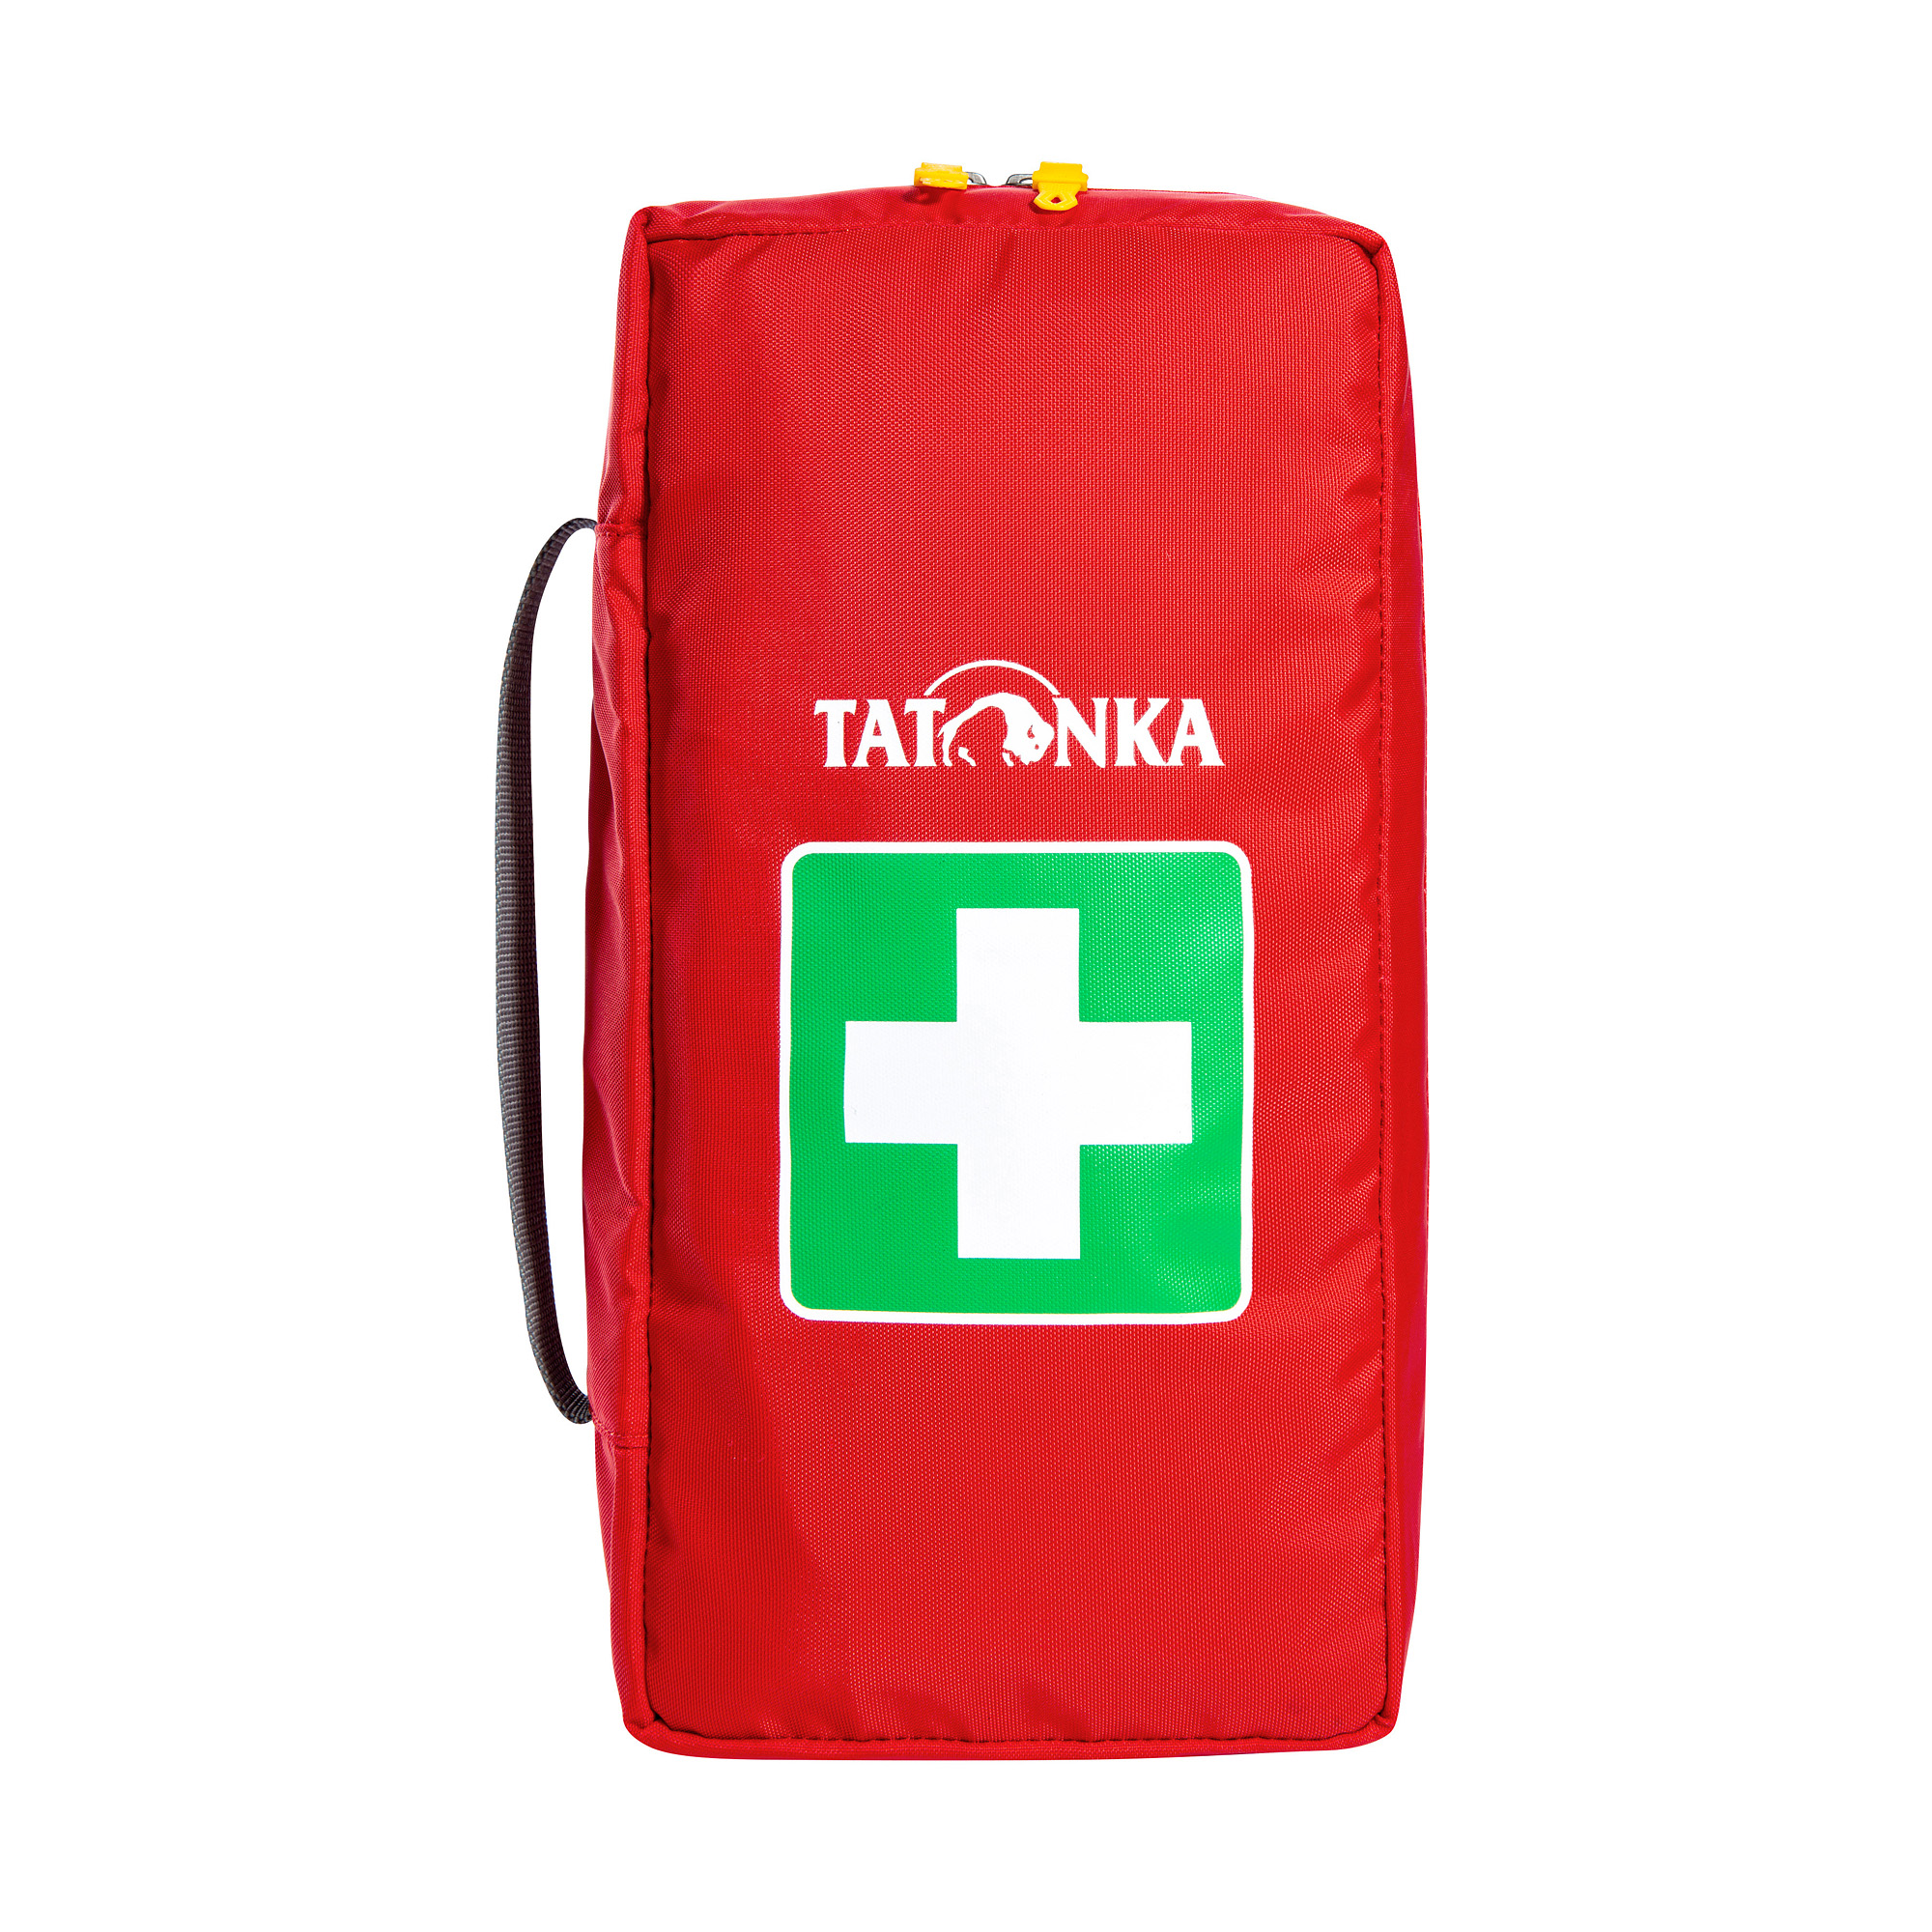 Tatonka First Aid "M" red rot Erste-Hilfe-Rucksäcke /-taschen 4013236281514